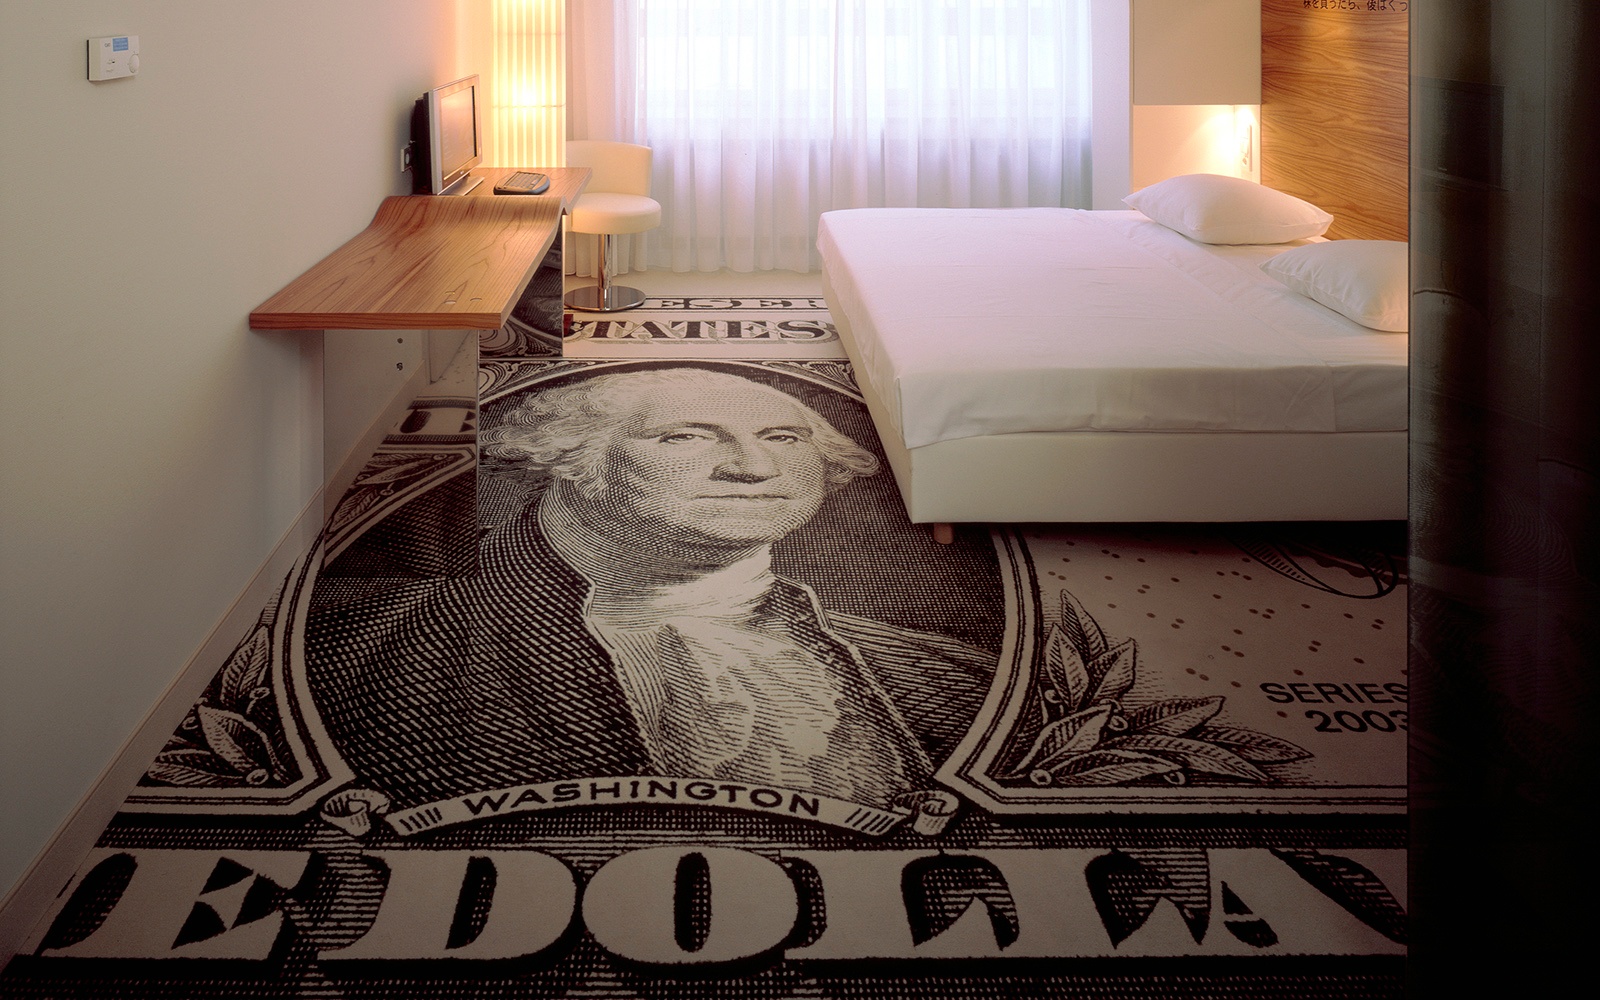 Hotel Wall Street in Germany - ege carpets